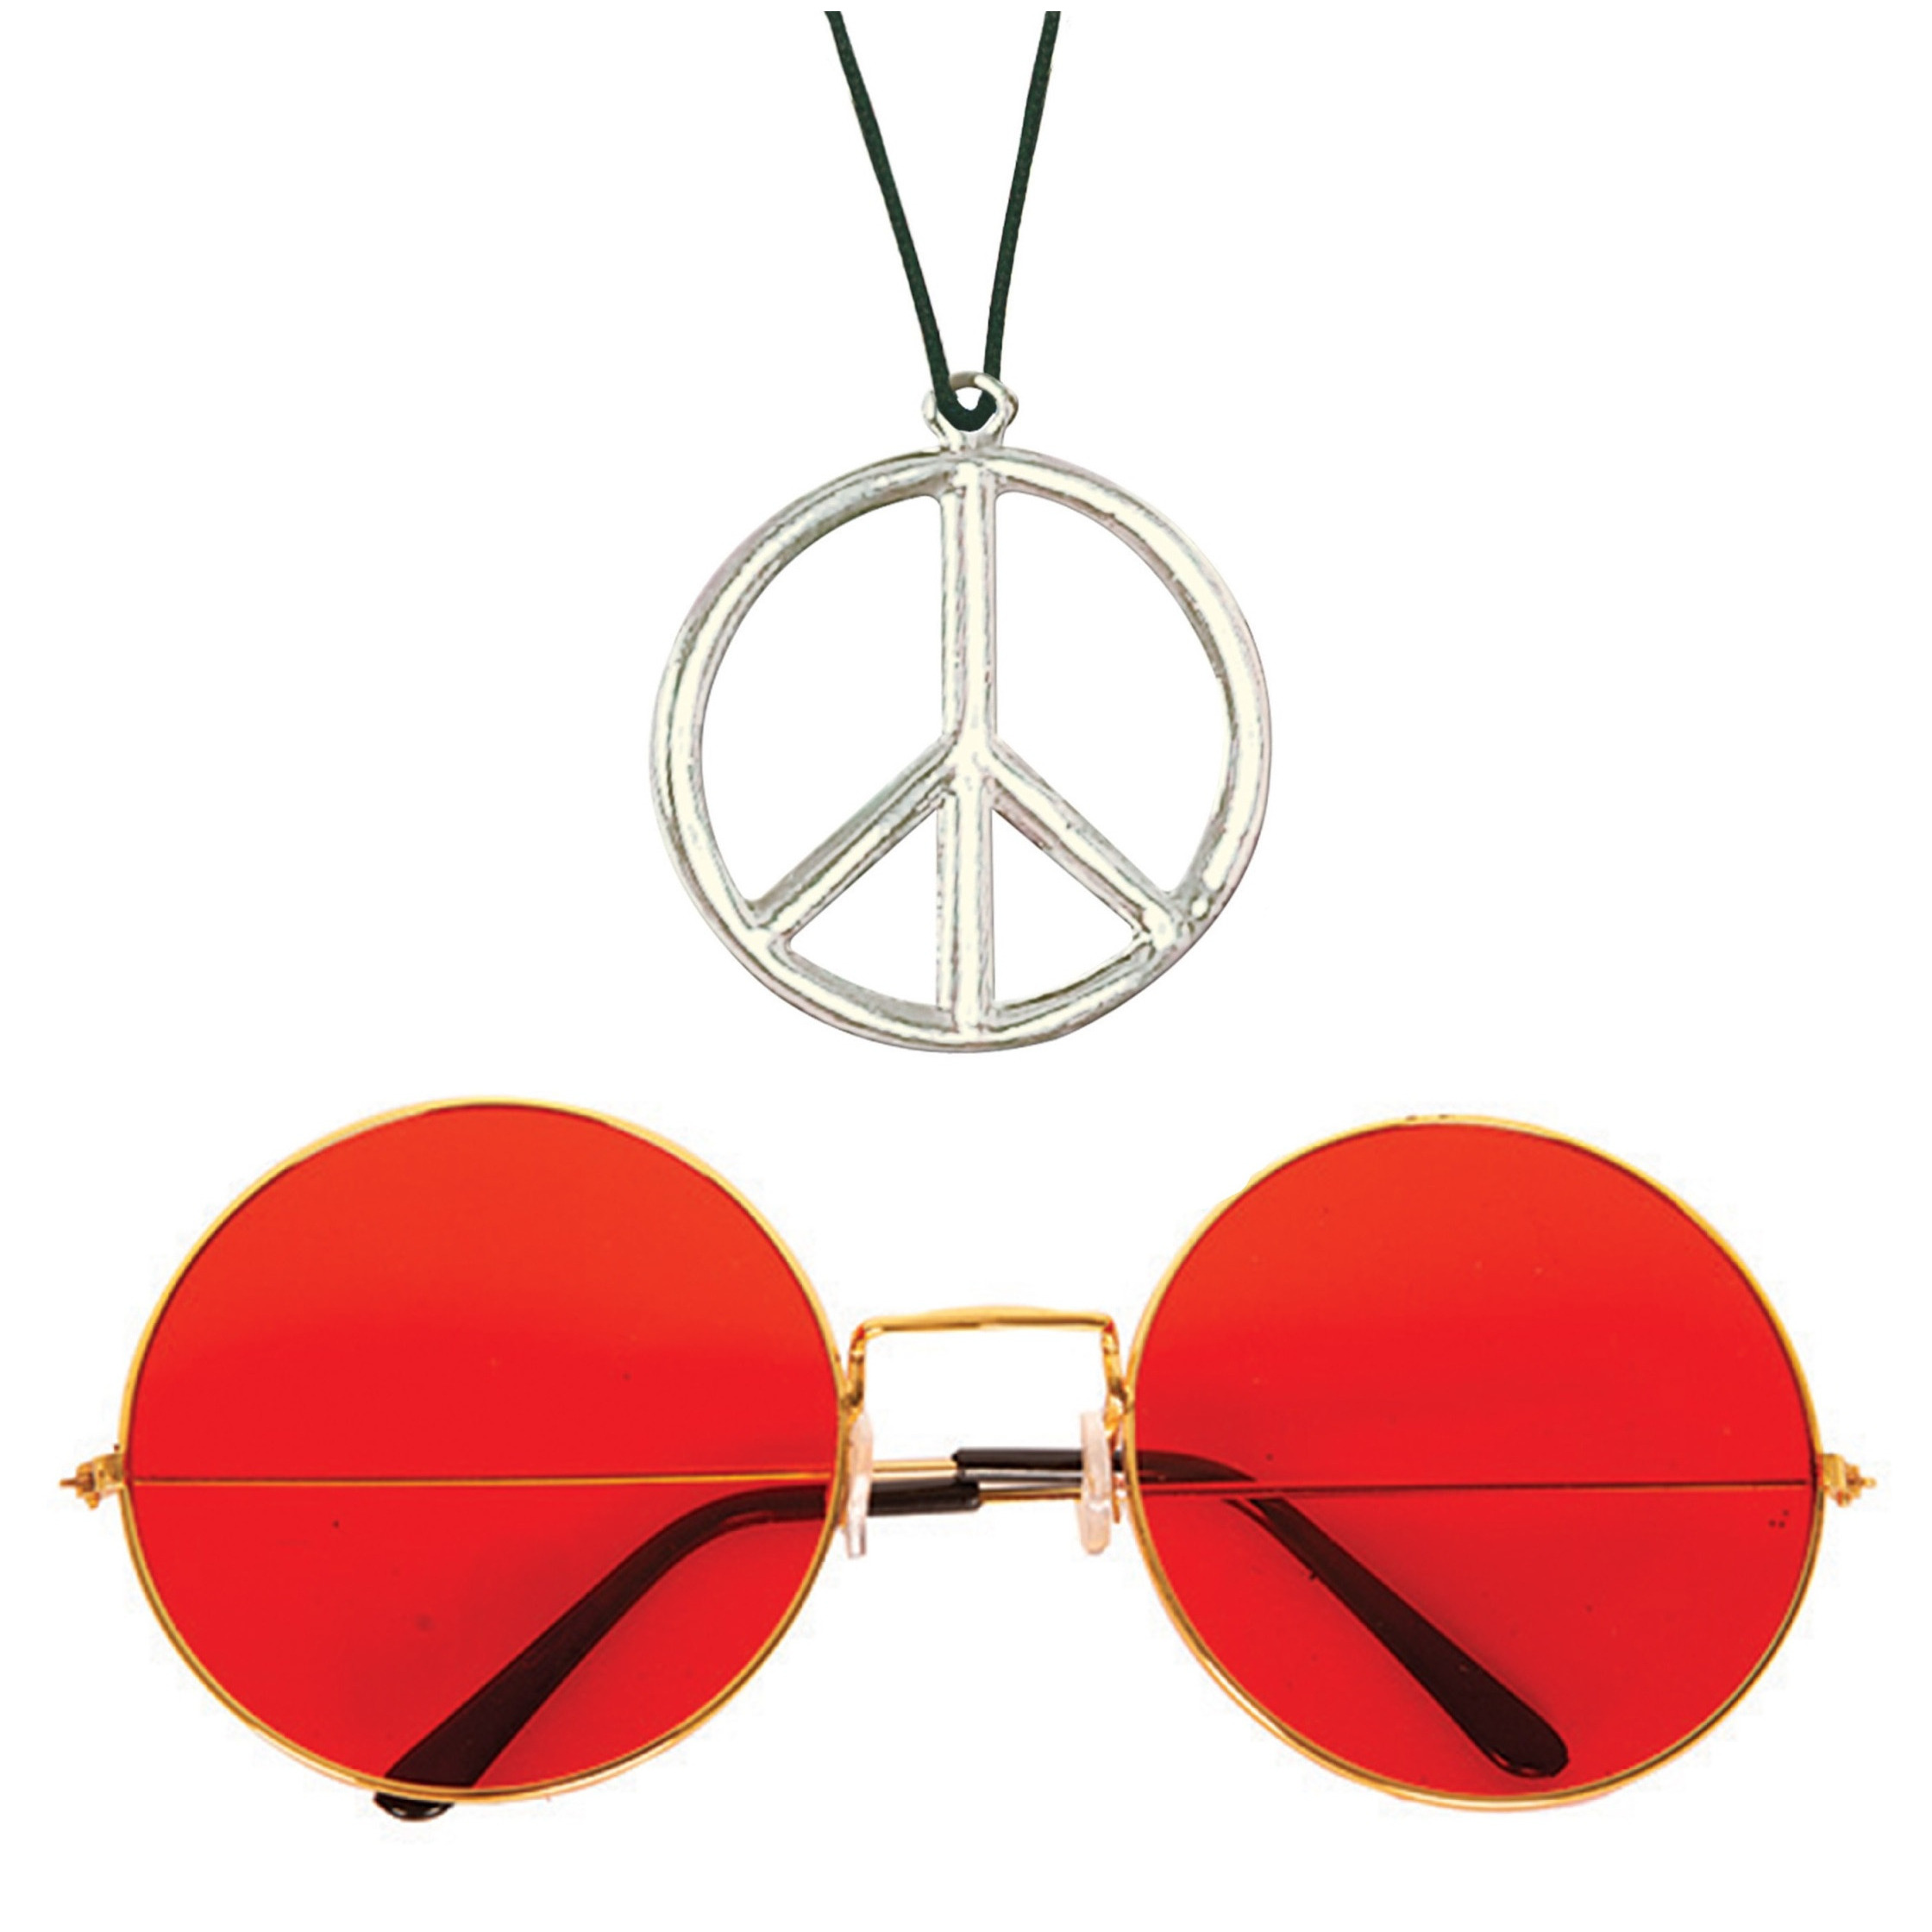 Hippie Flower Power Sixties verkleed set ketting met rode party bril